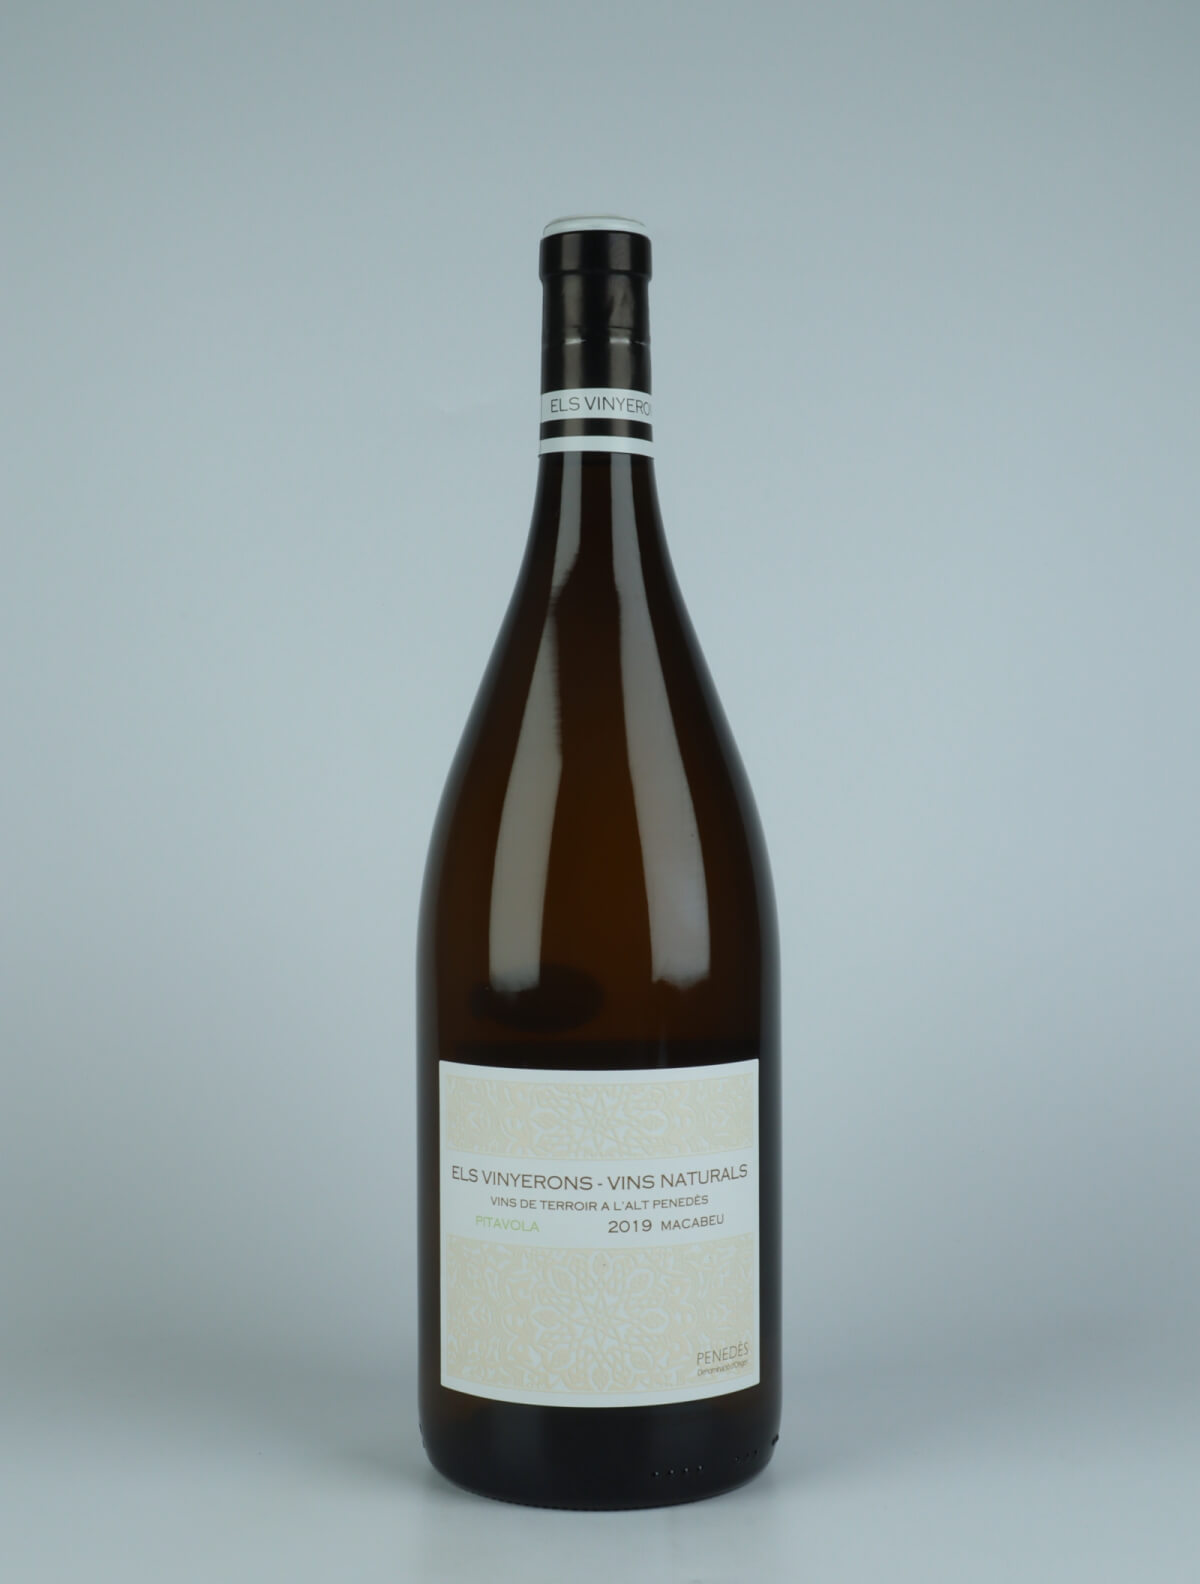 A bottle 2019 Pitavola - Magnum White wine from Els Vinyerons, Penedès in Spain